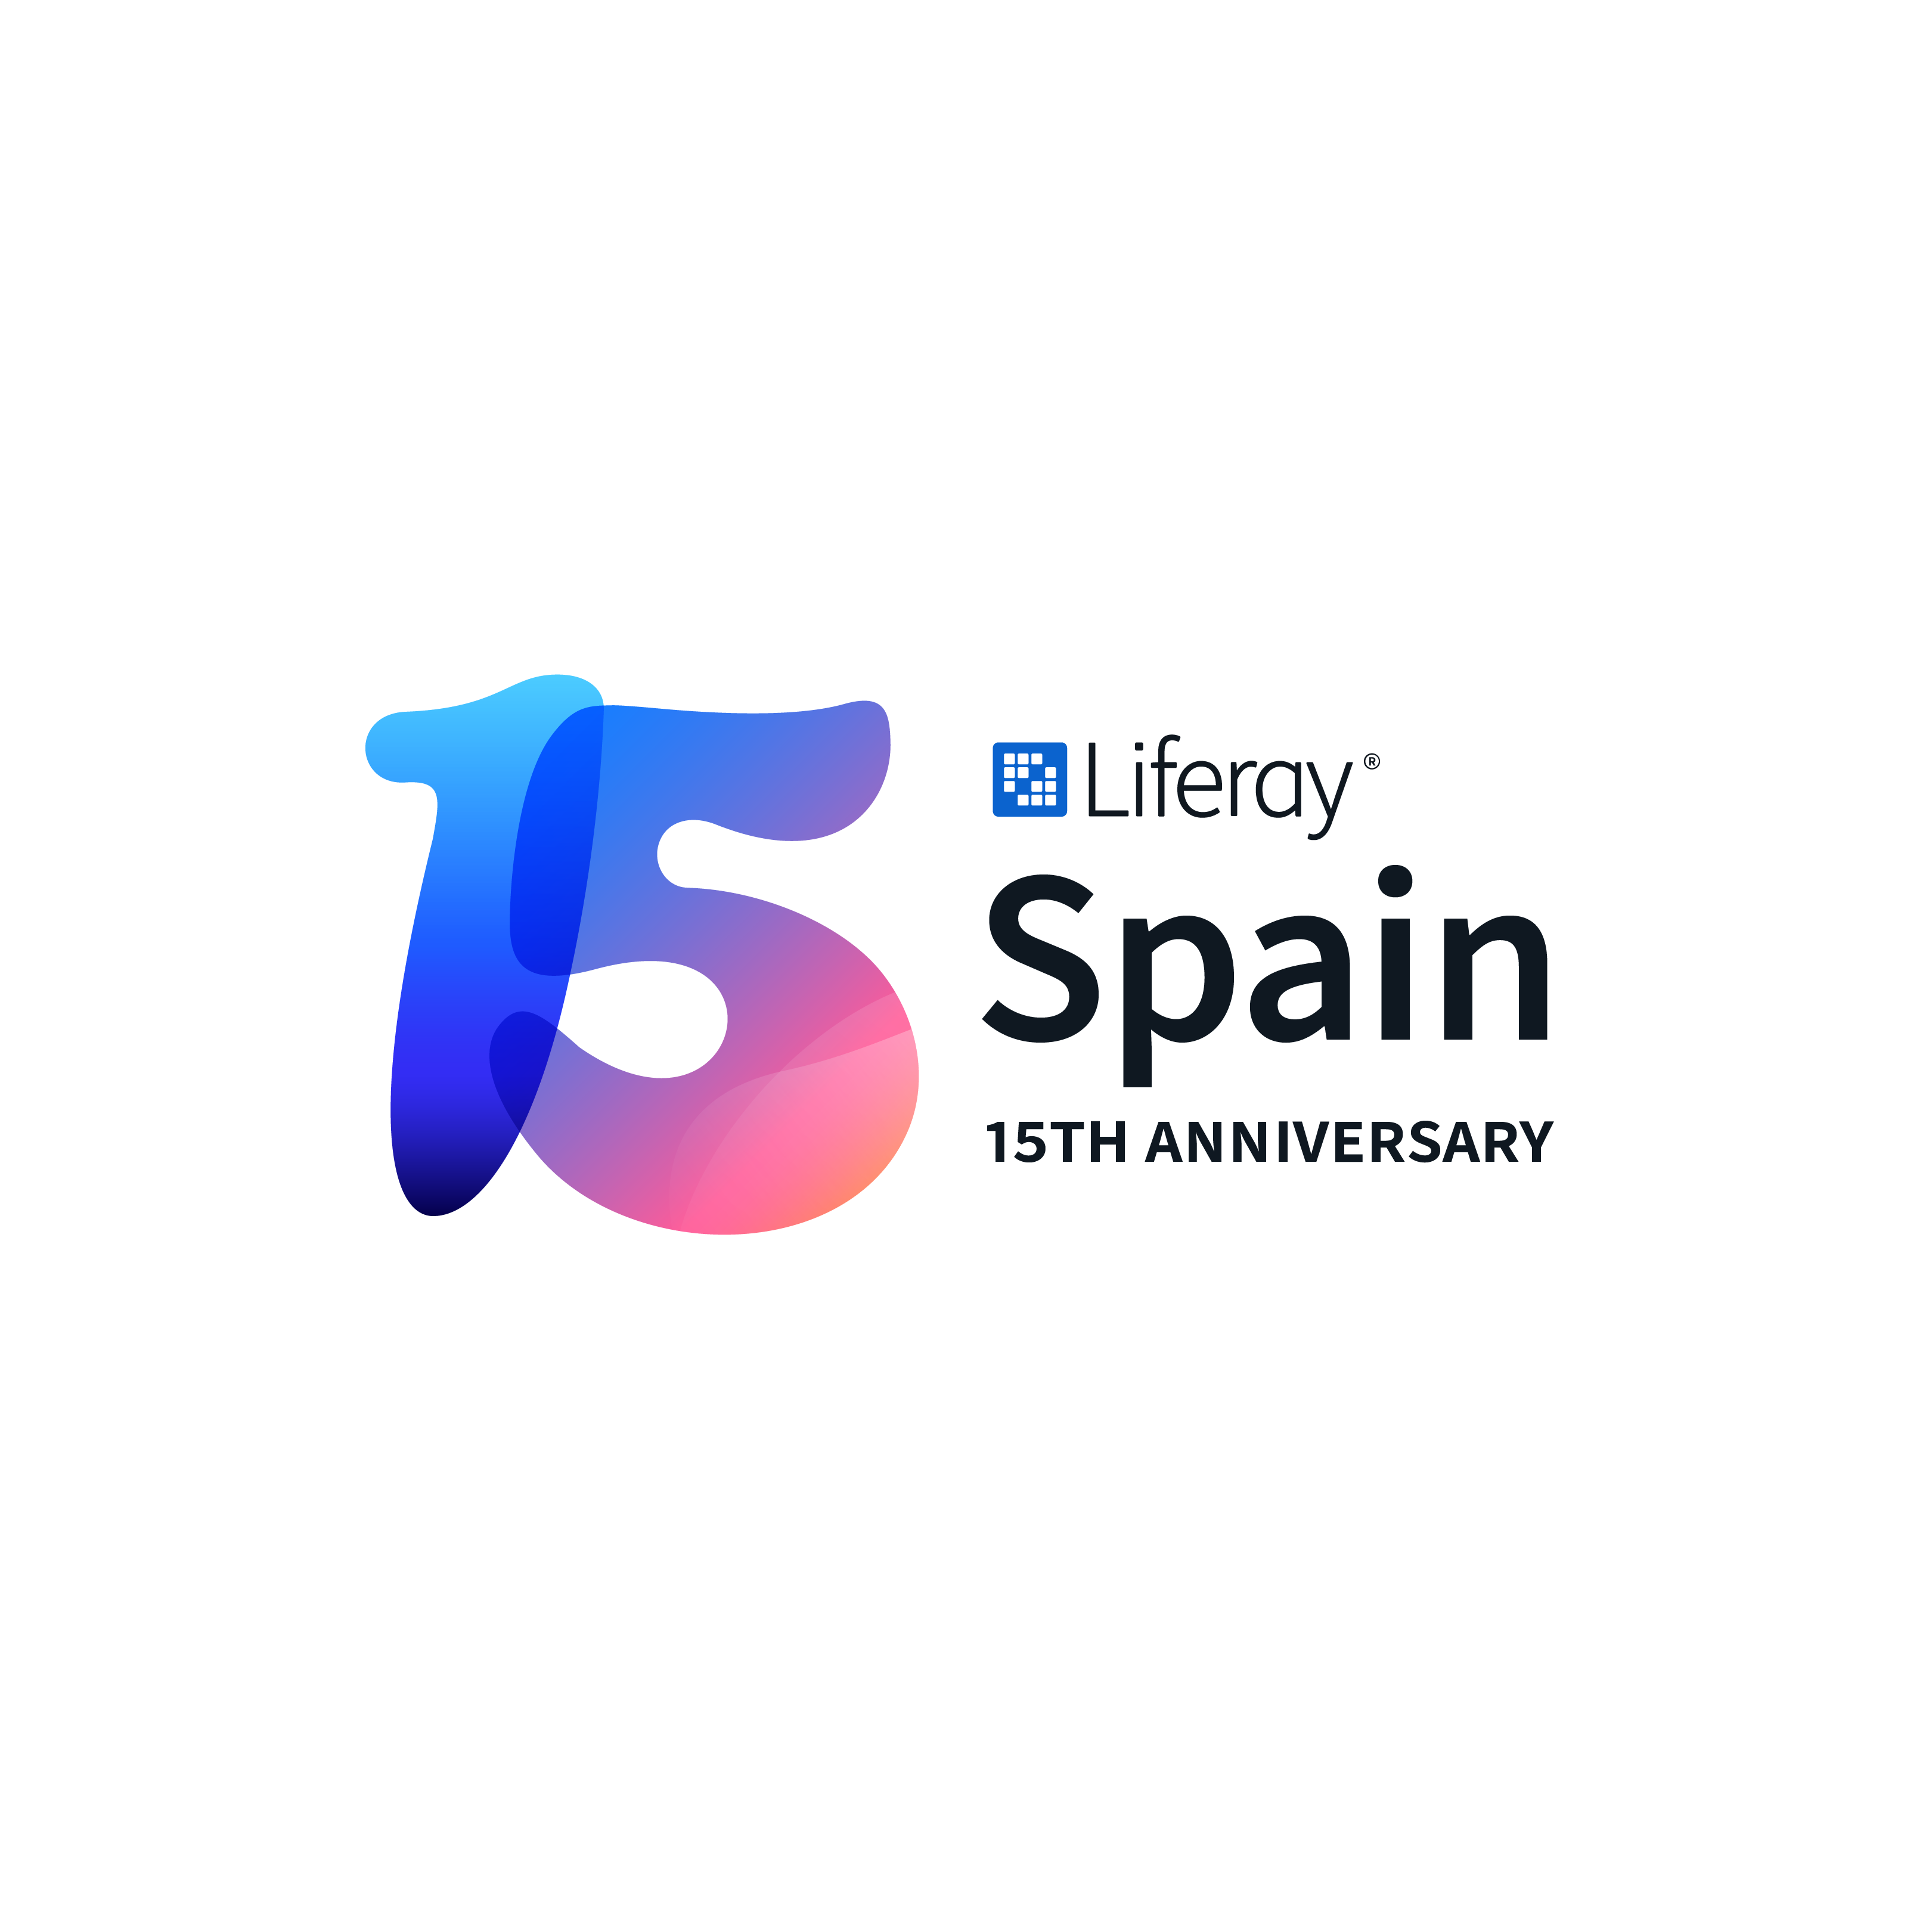 Liferay Spain 15th Anniversary Logo.png